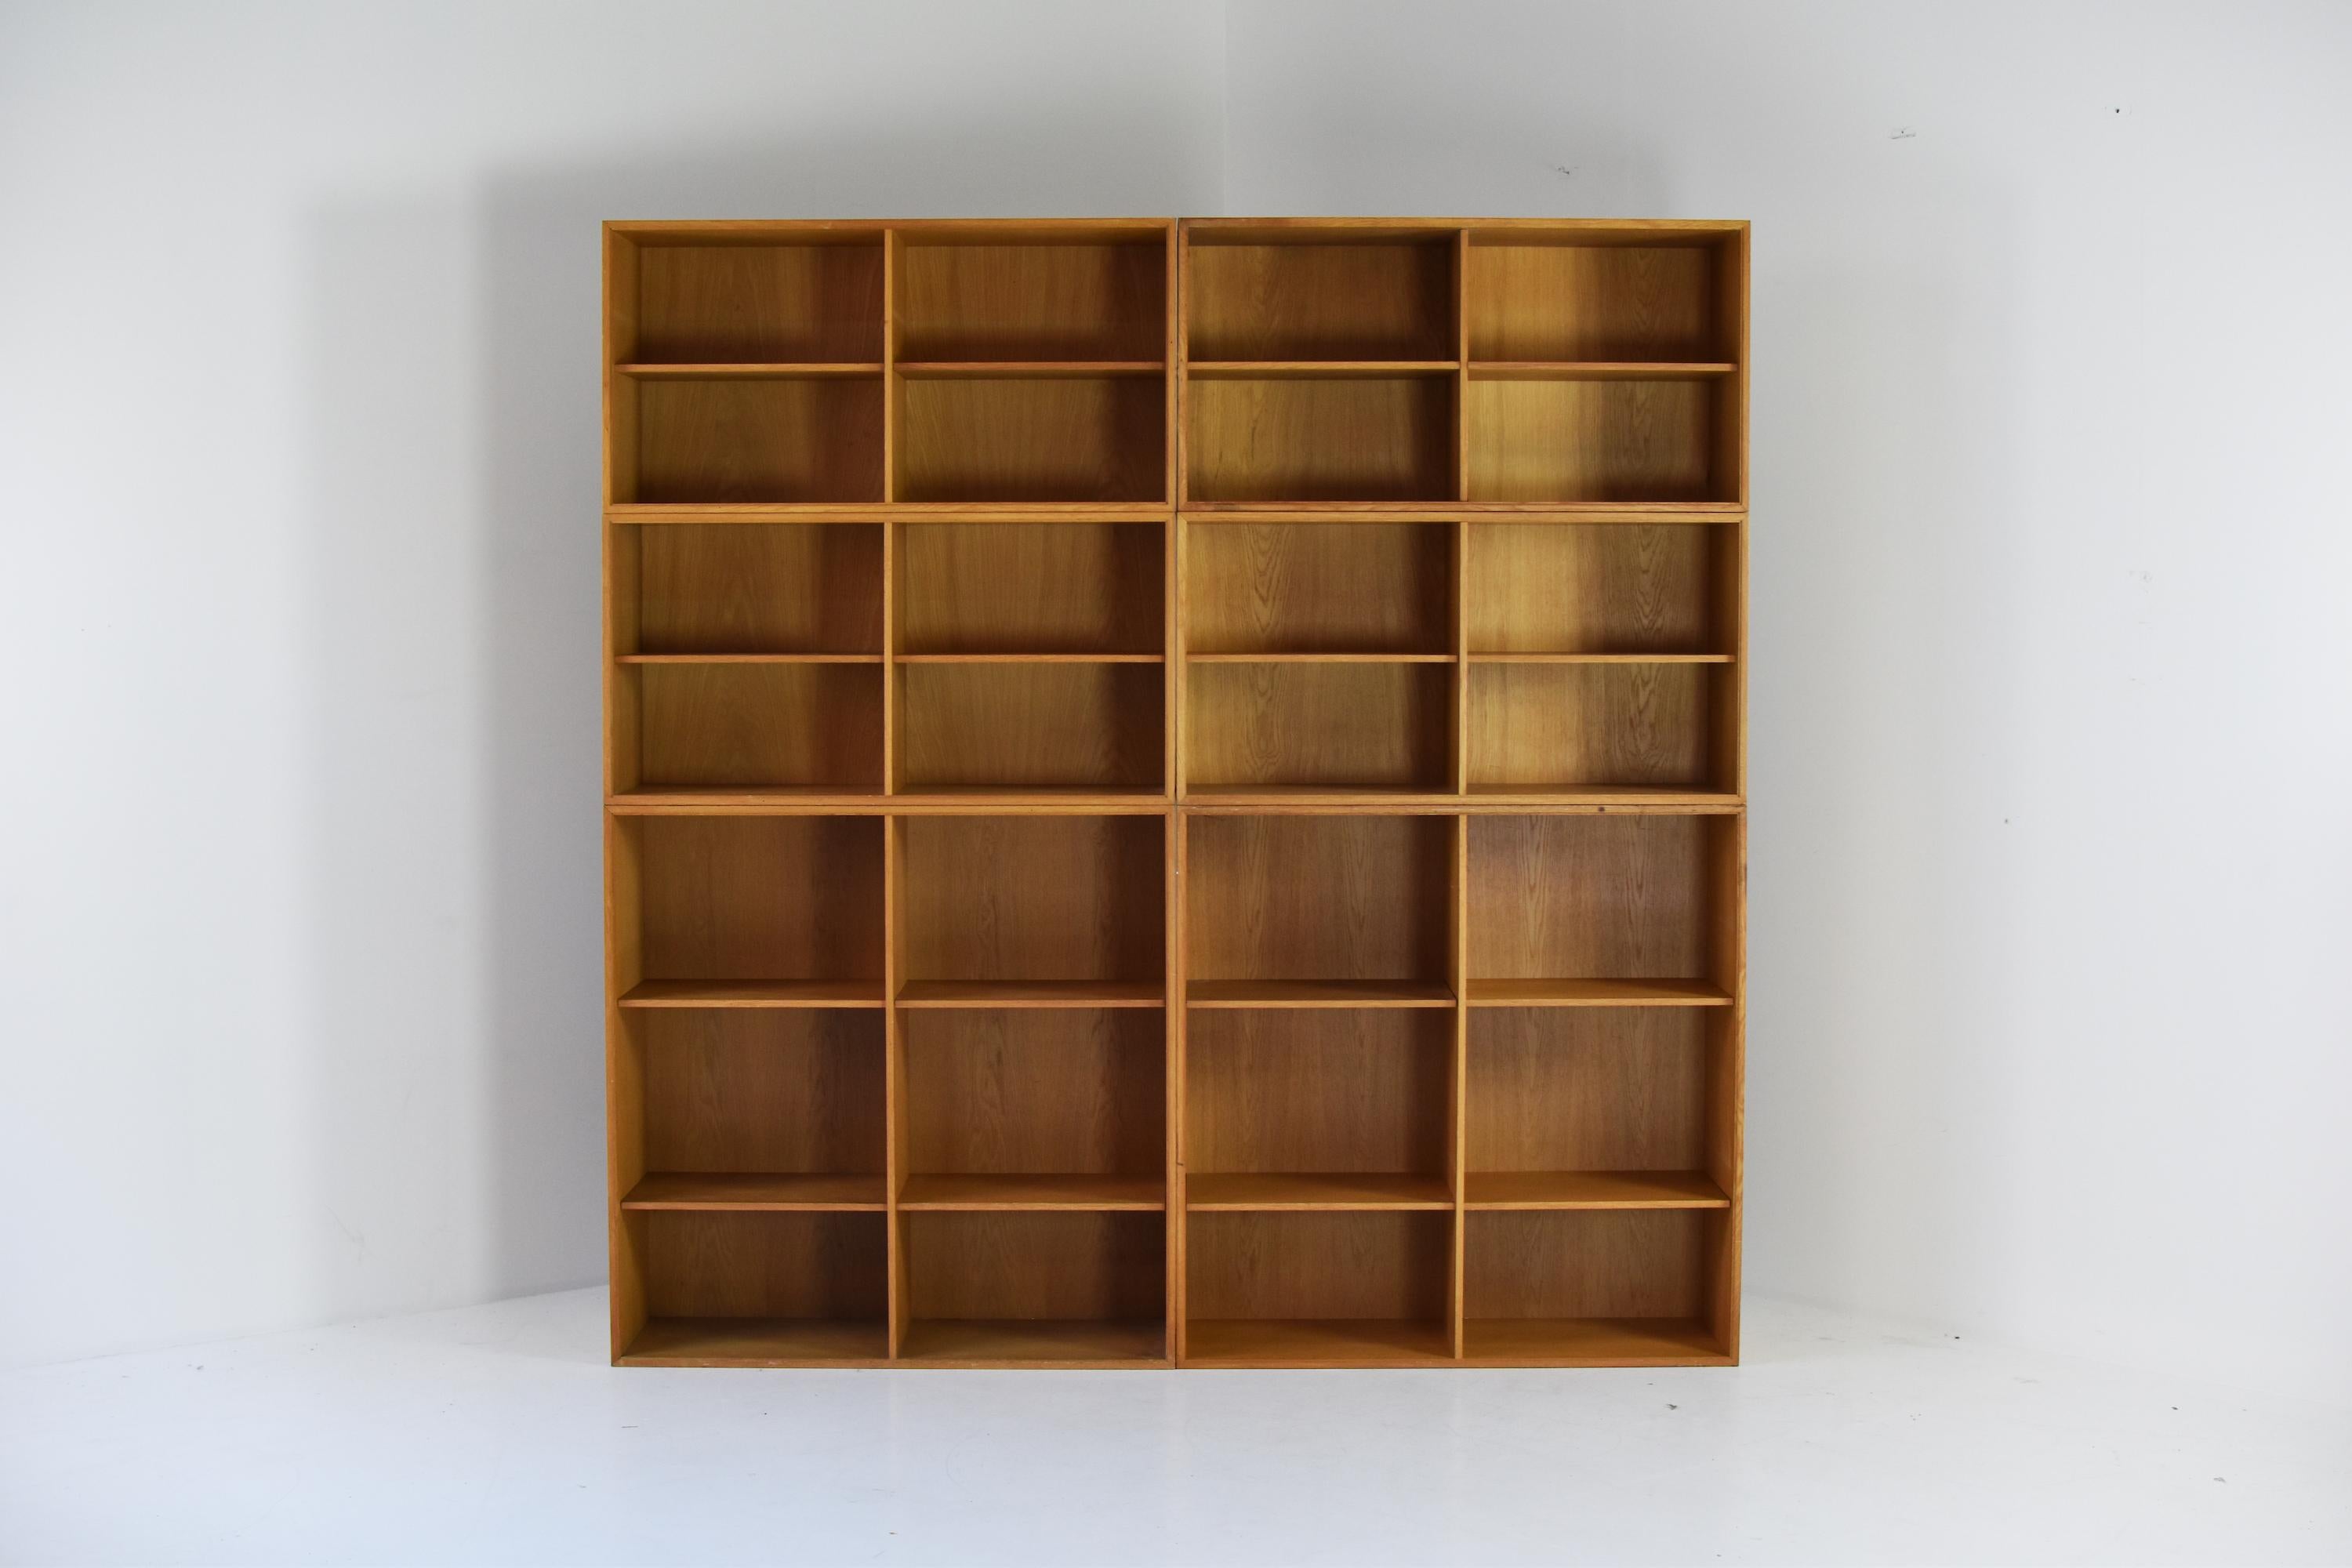 Scandinavian Modern Open storage cabinets by Rud Thygesen for HG Furniture, Denmark 1960s.